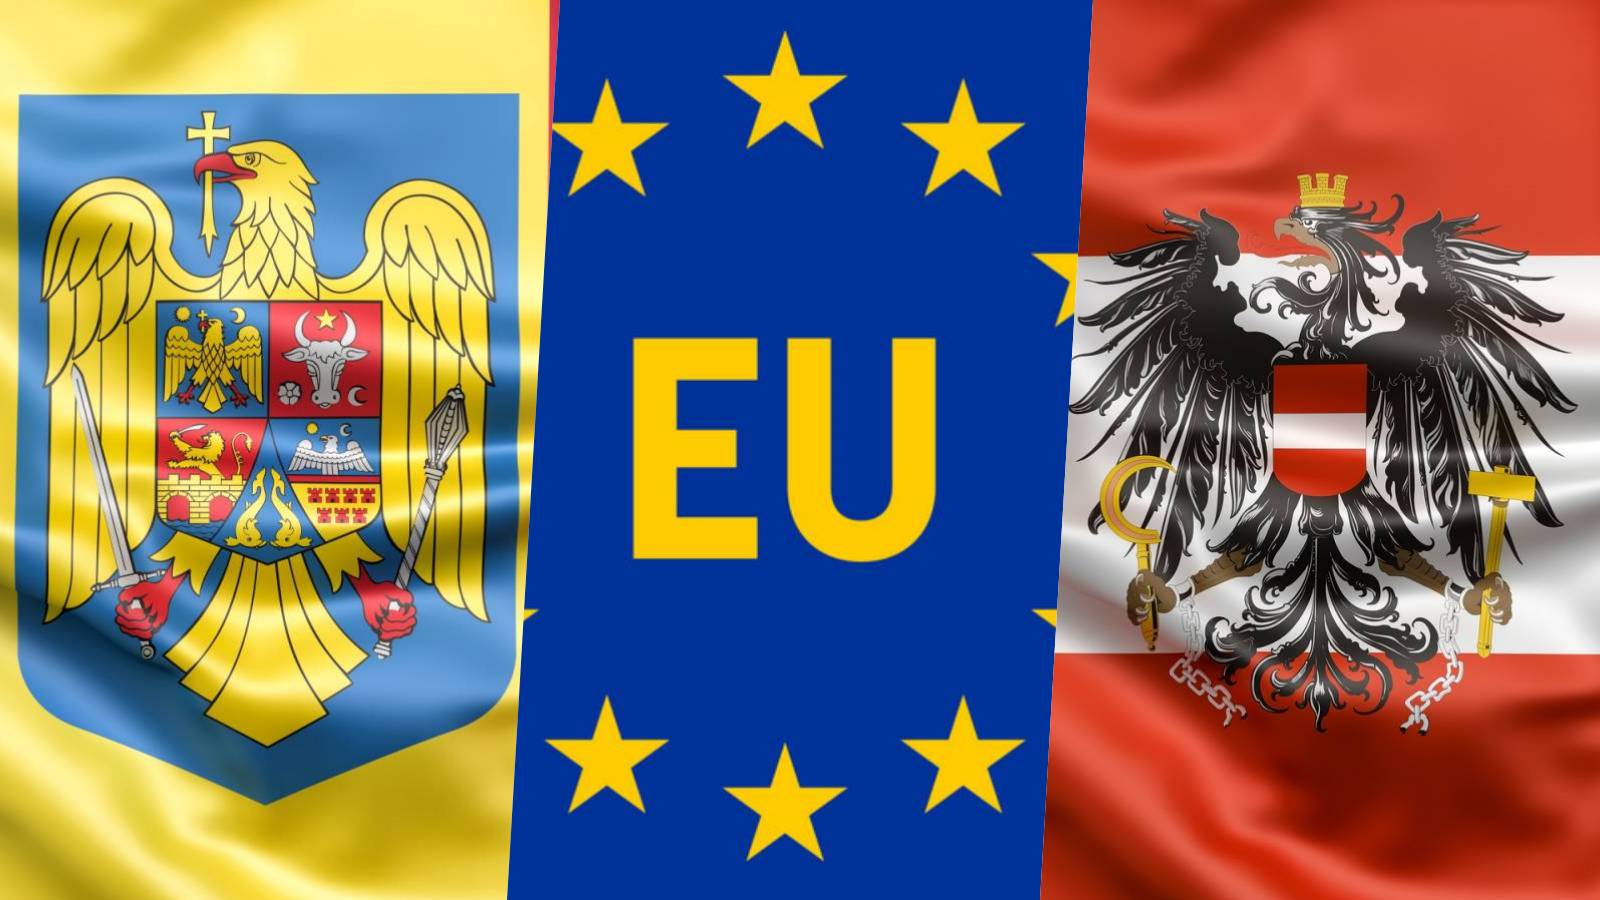 Austria 2 Decizii ULTIMA ORA Karl Nehammer BLOCAREA Aderarii Romaniei Schengen Continua